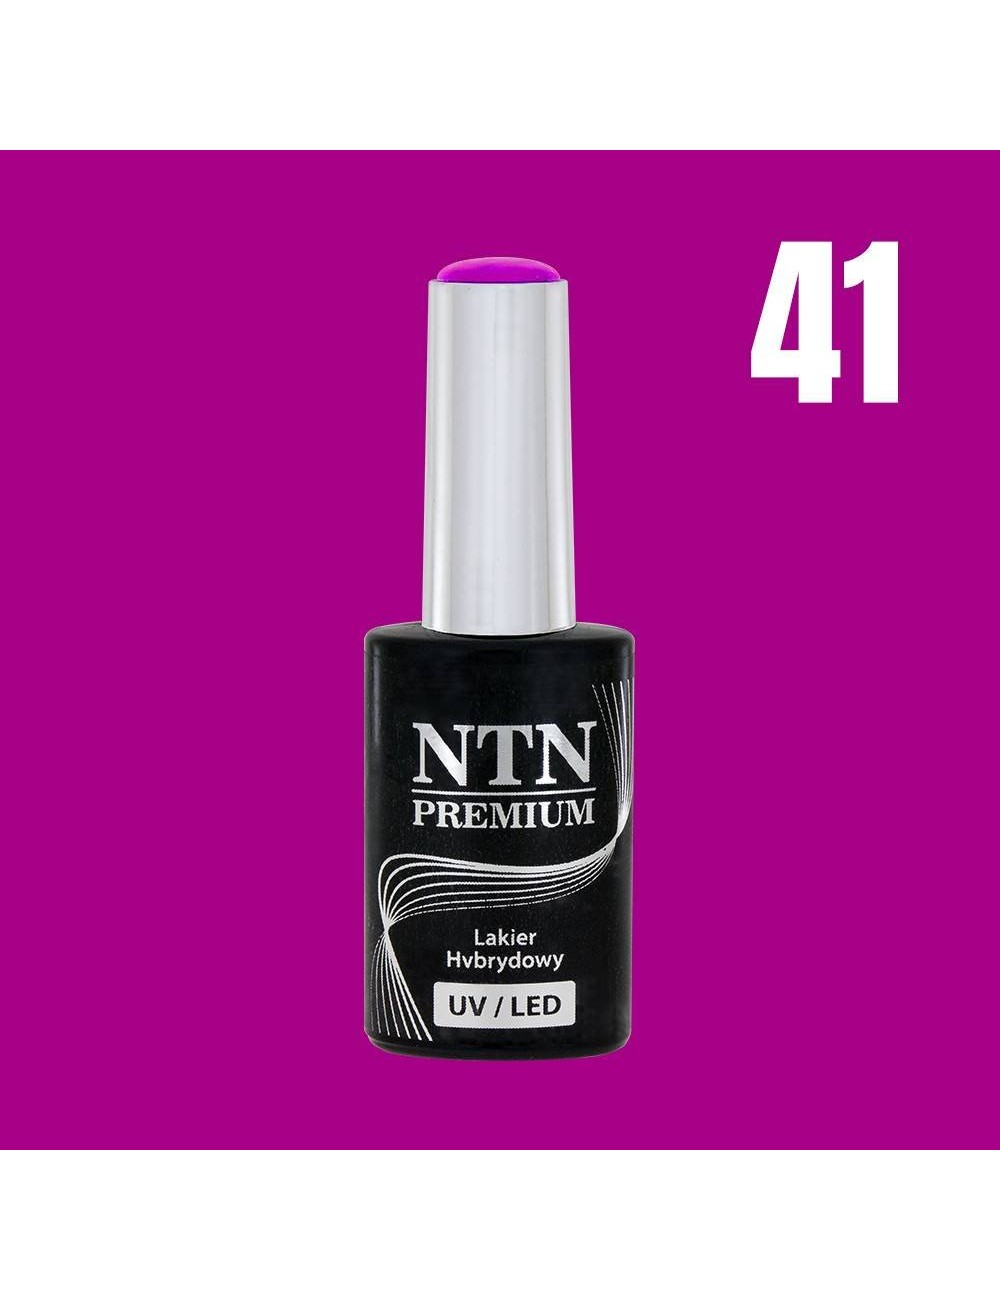 NTN premium 41